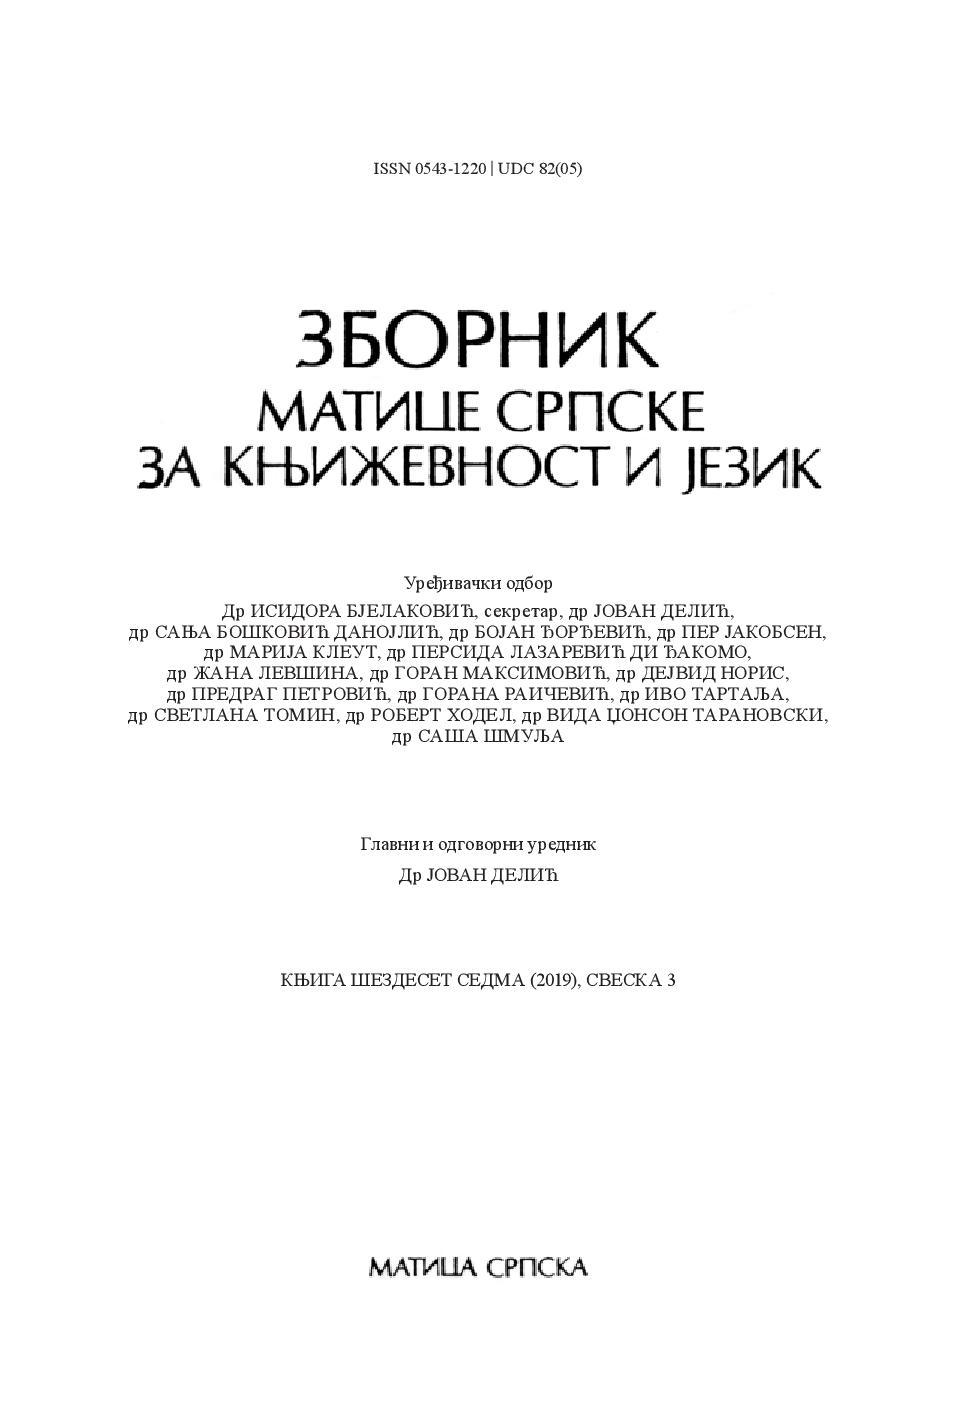 BYZANTINE SPIRITUALITY IN THE POETRY OF MILORAD PAVIĆ Cover Image